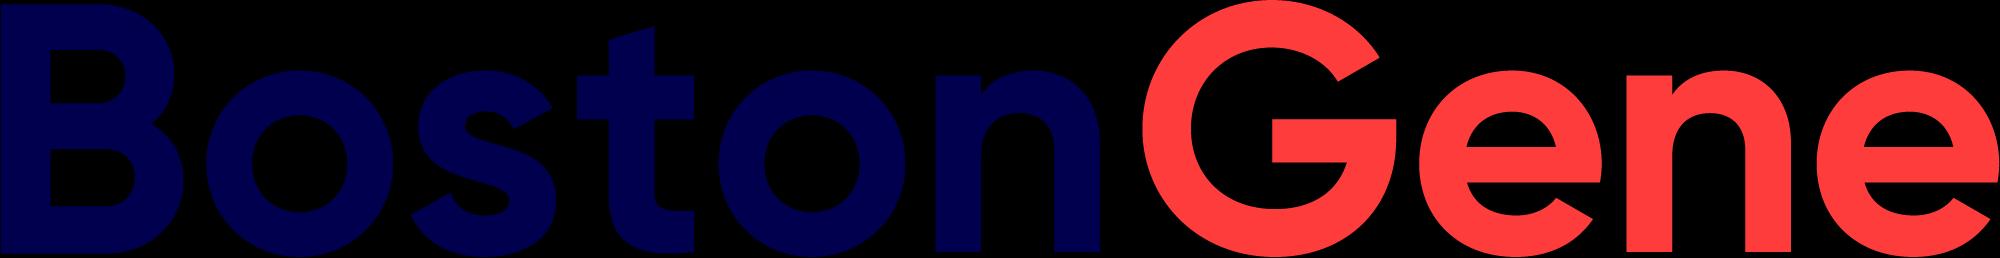 BostonGene_logo